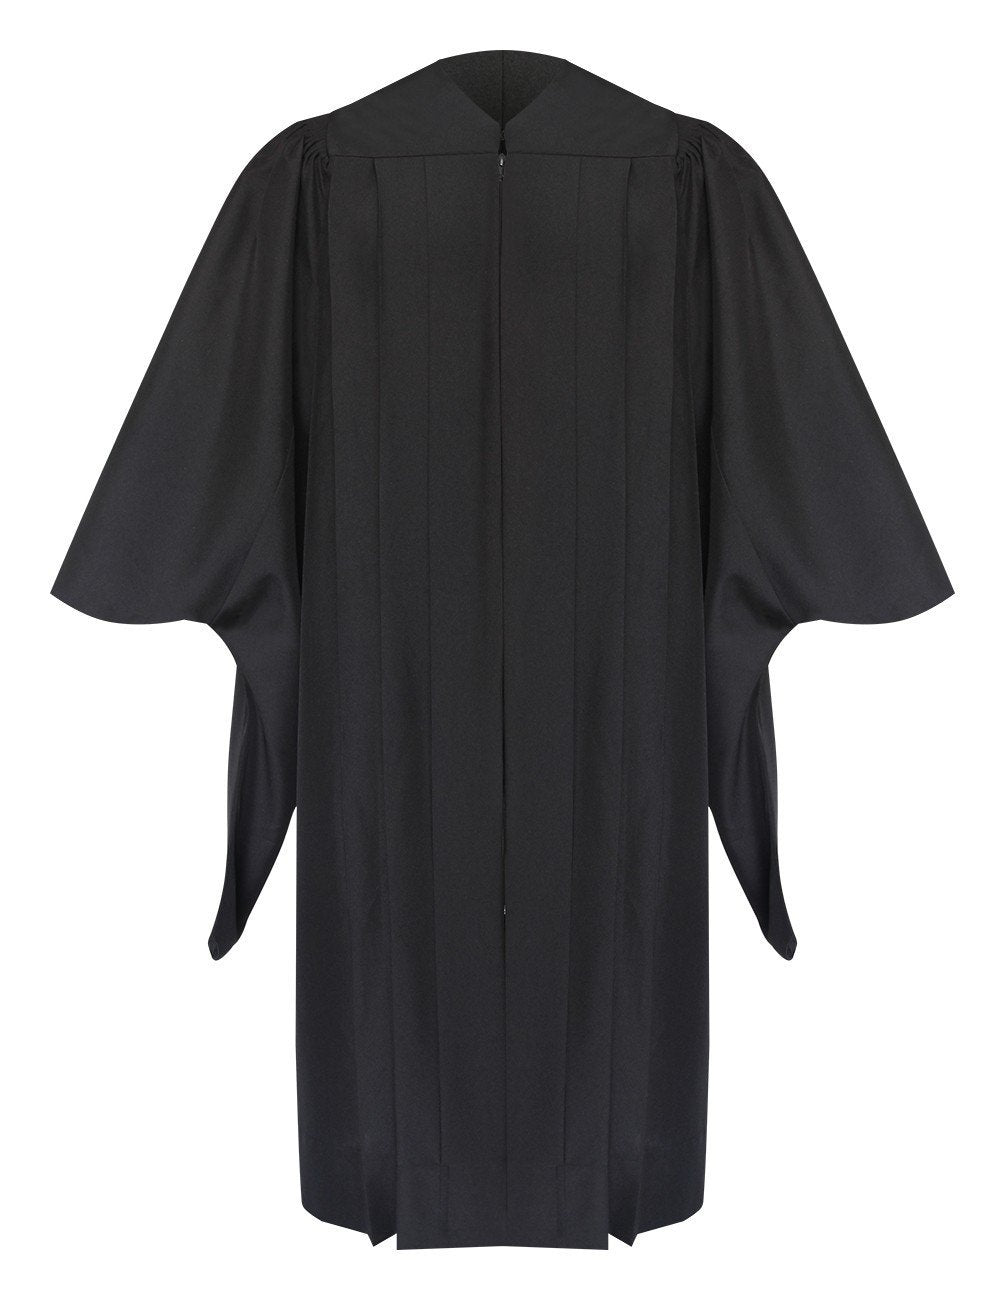 Deluxe Masters Graduation Gown - Academic Regalia - Graduation Cap and Gown